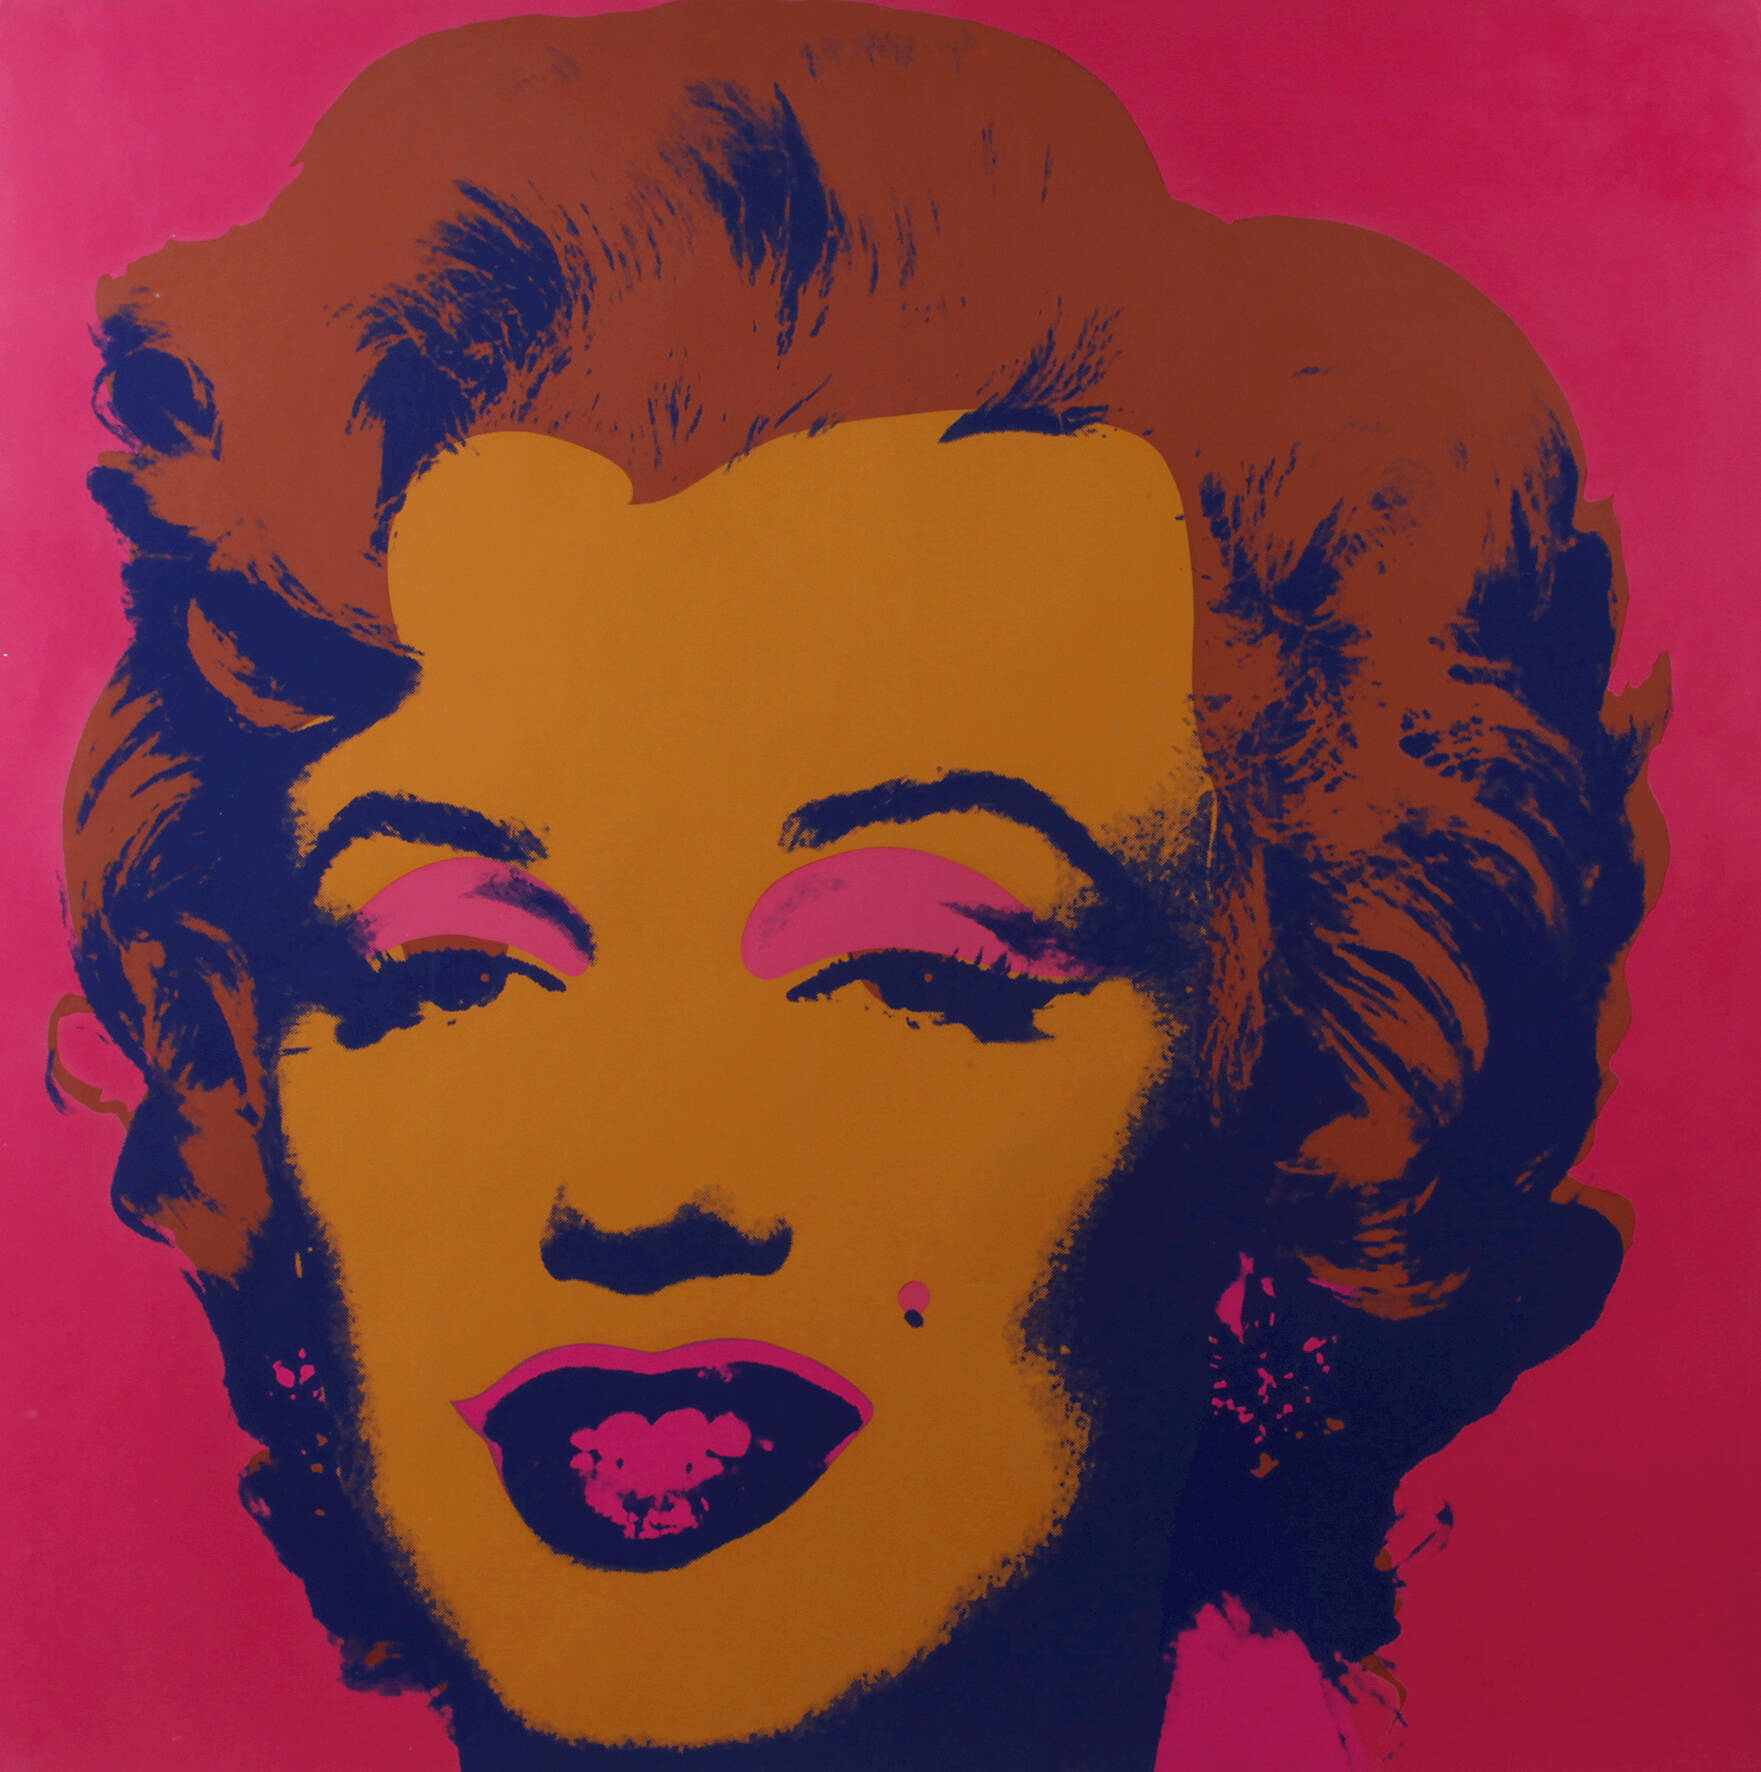 Andy Warhol, "Marilyn Monroe"